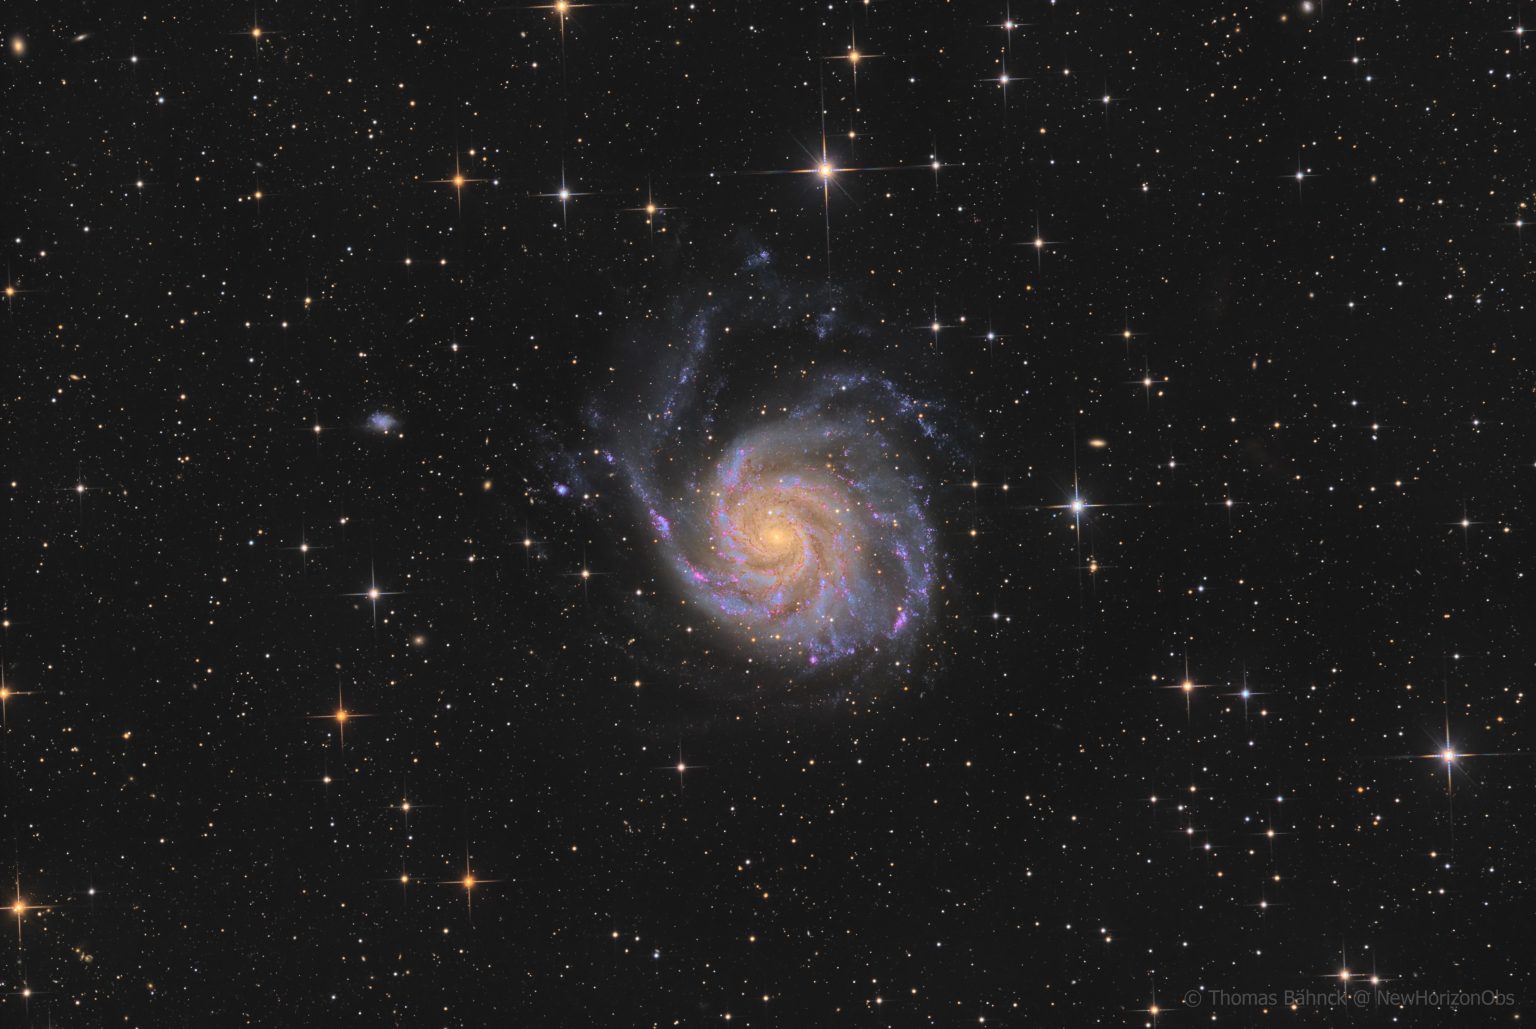 M101 - Feuerradgalaxie